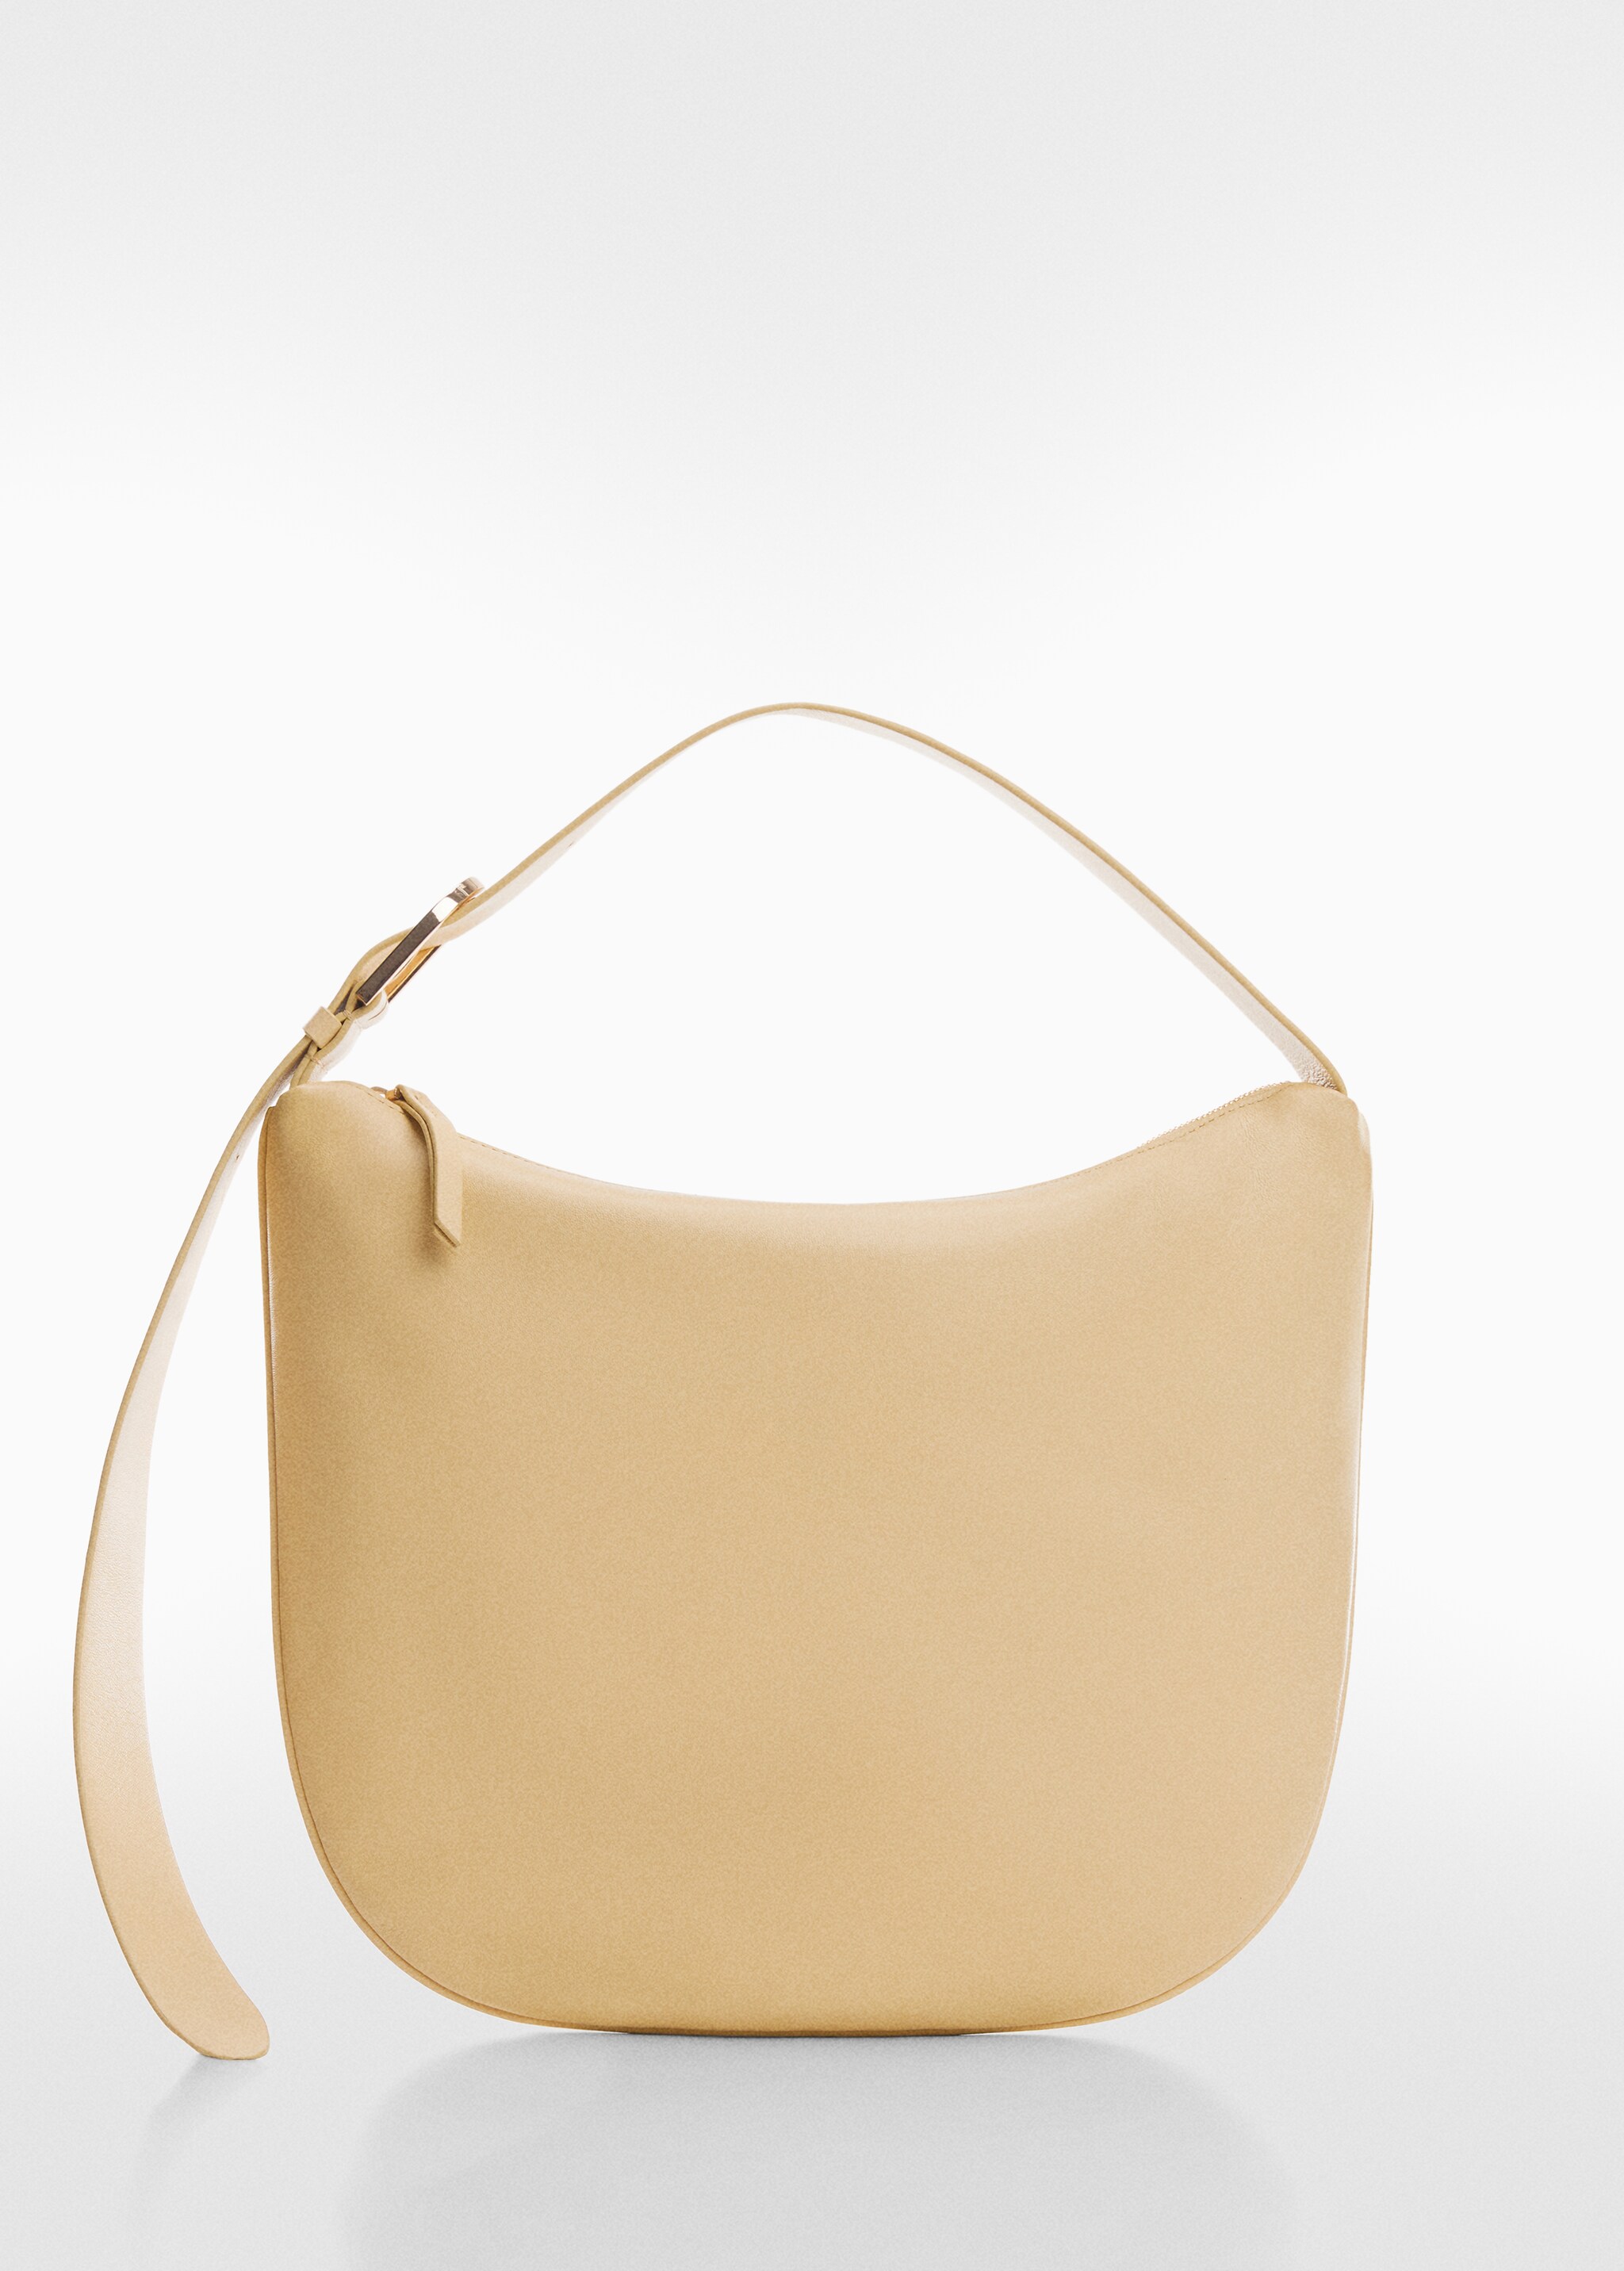 Leather shoulder bag - Article without model